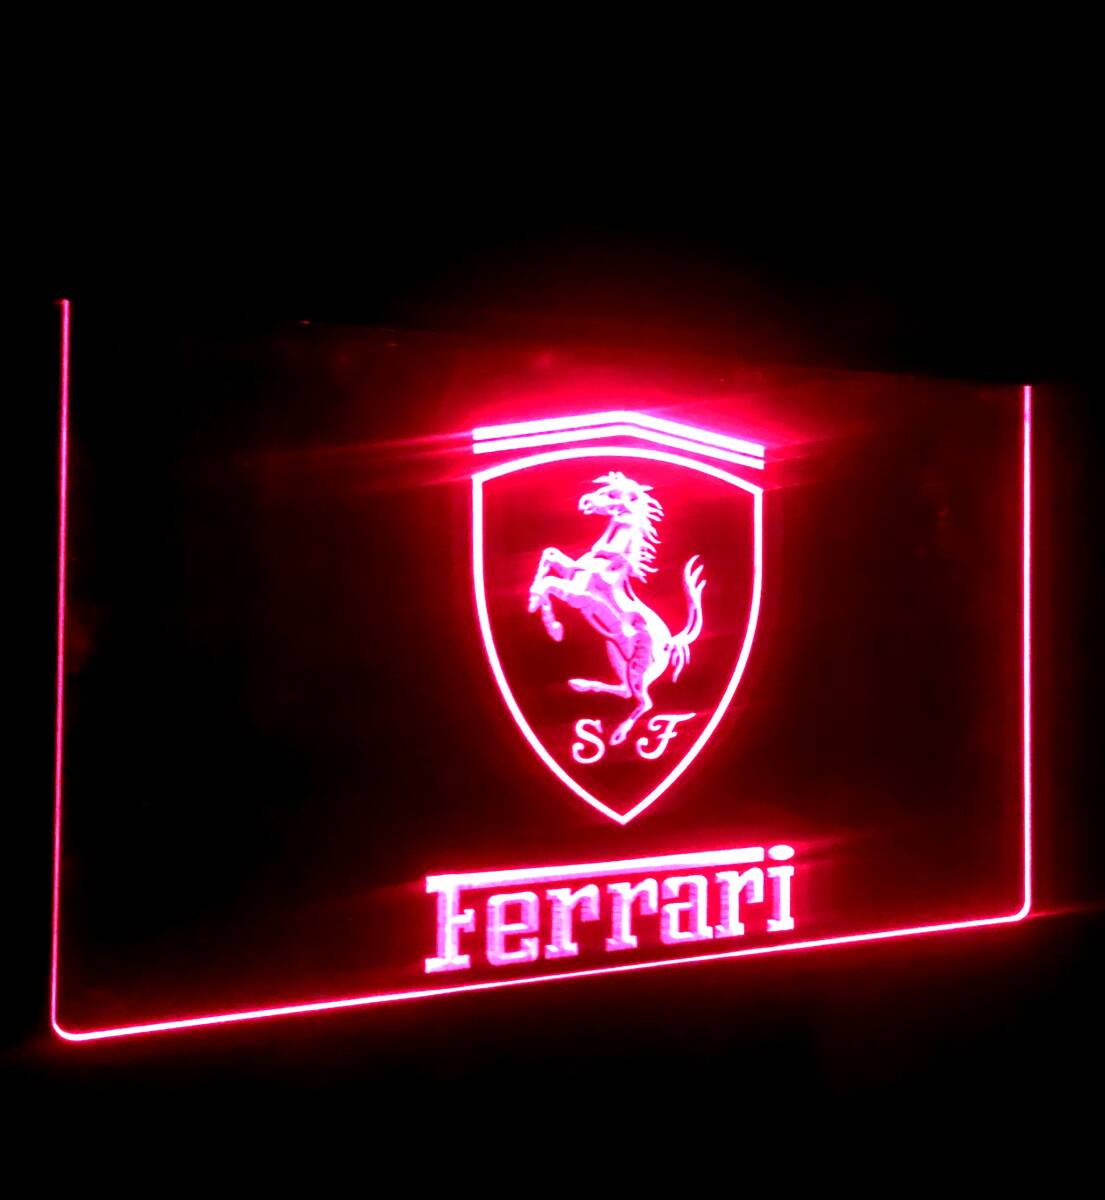 LED ネオンサイン 看板 ガレージ雑貨 LED照明 フェラーリ バナー 旗 タペストリー フラッグ アメリカン FERRARI ポスターの画像5